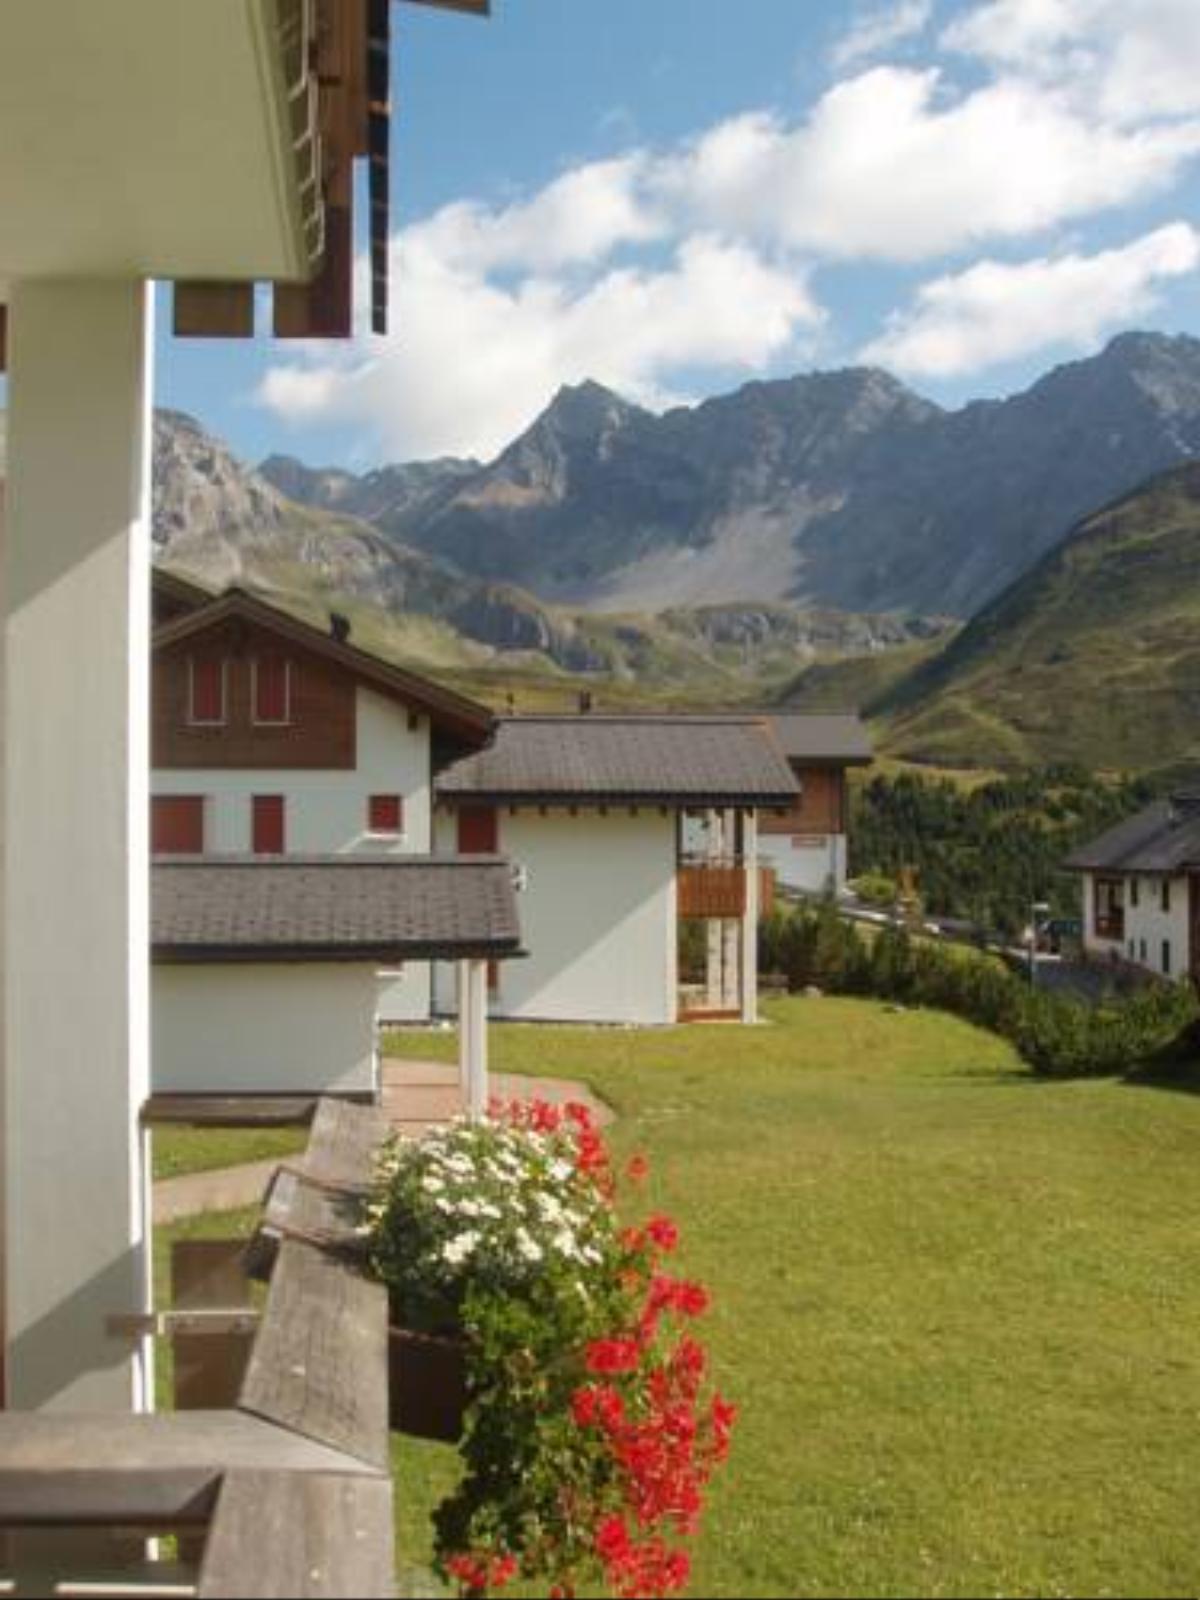 Chli Alpa A2 Hotel Arosa Switzerland